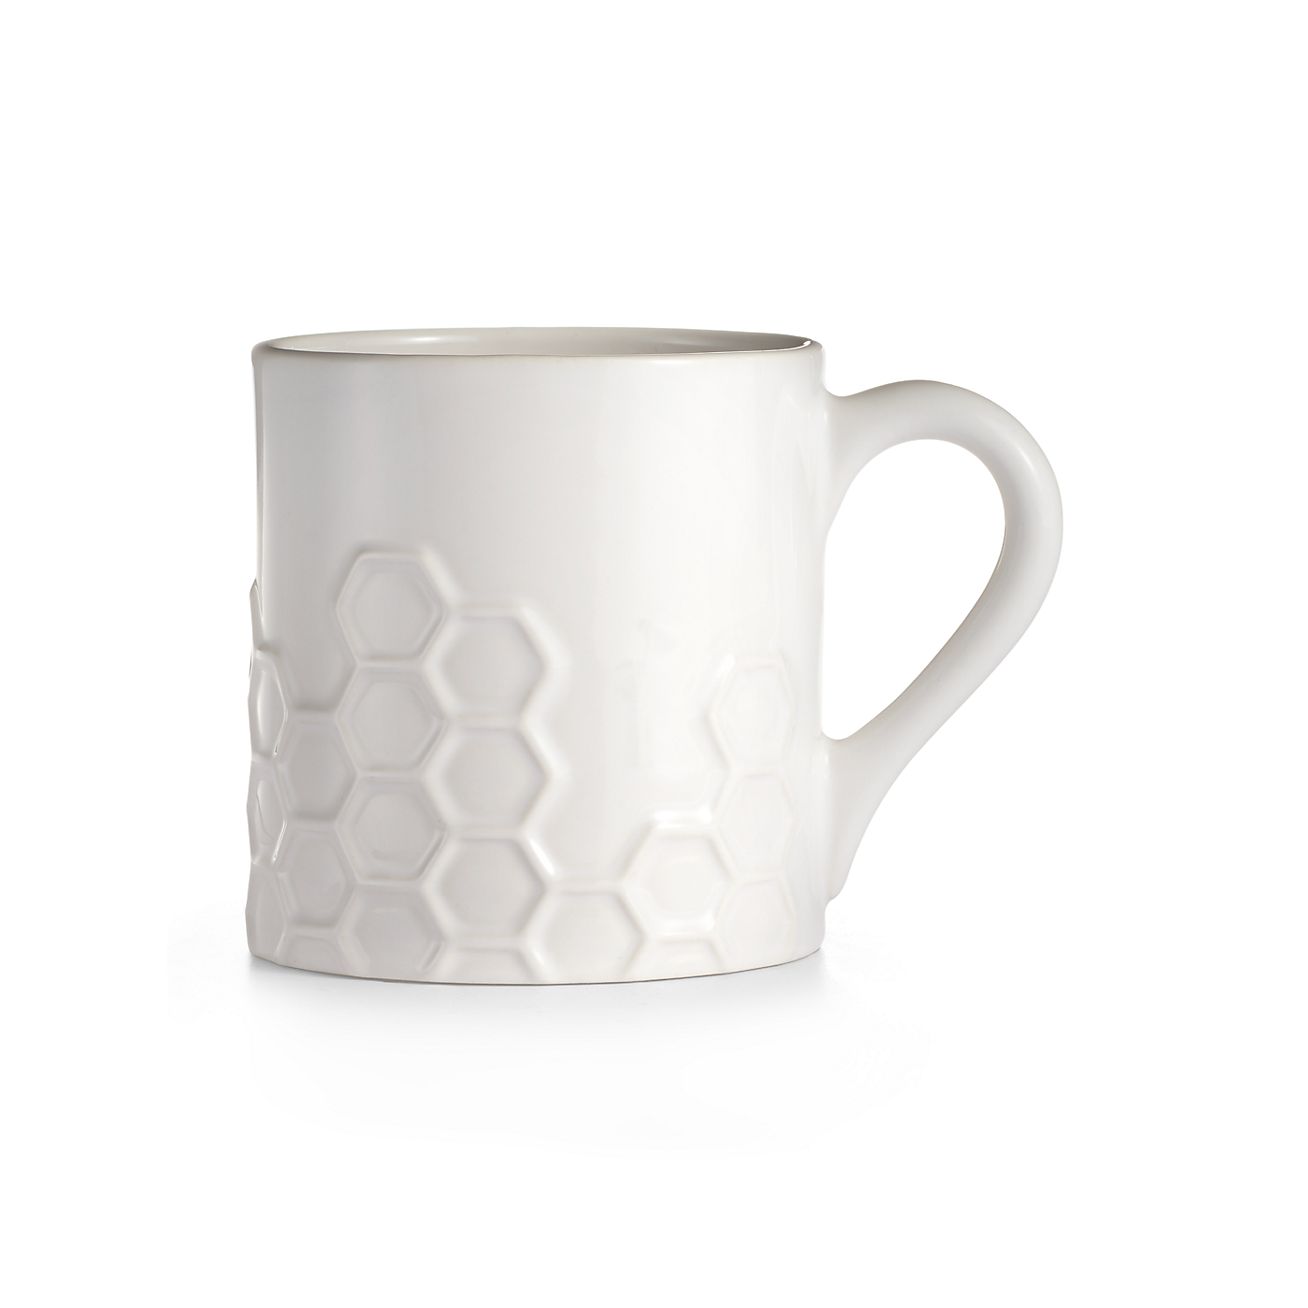 tiffany & co coffee mug